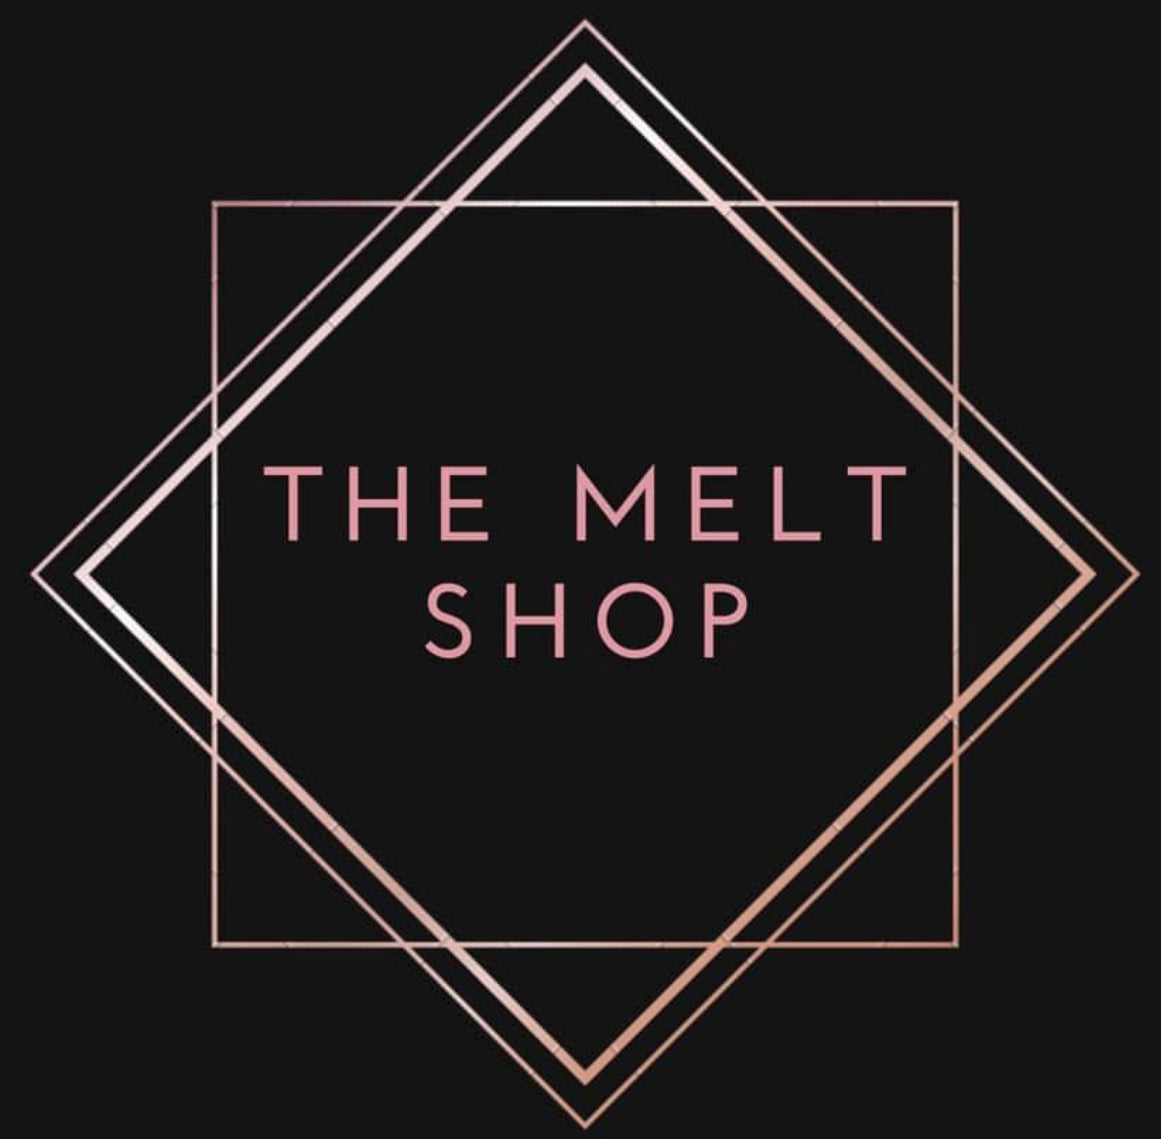 The melt shop